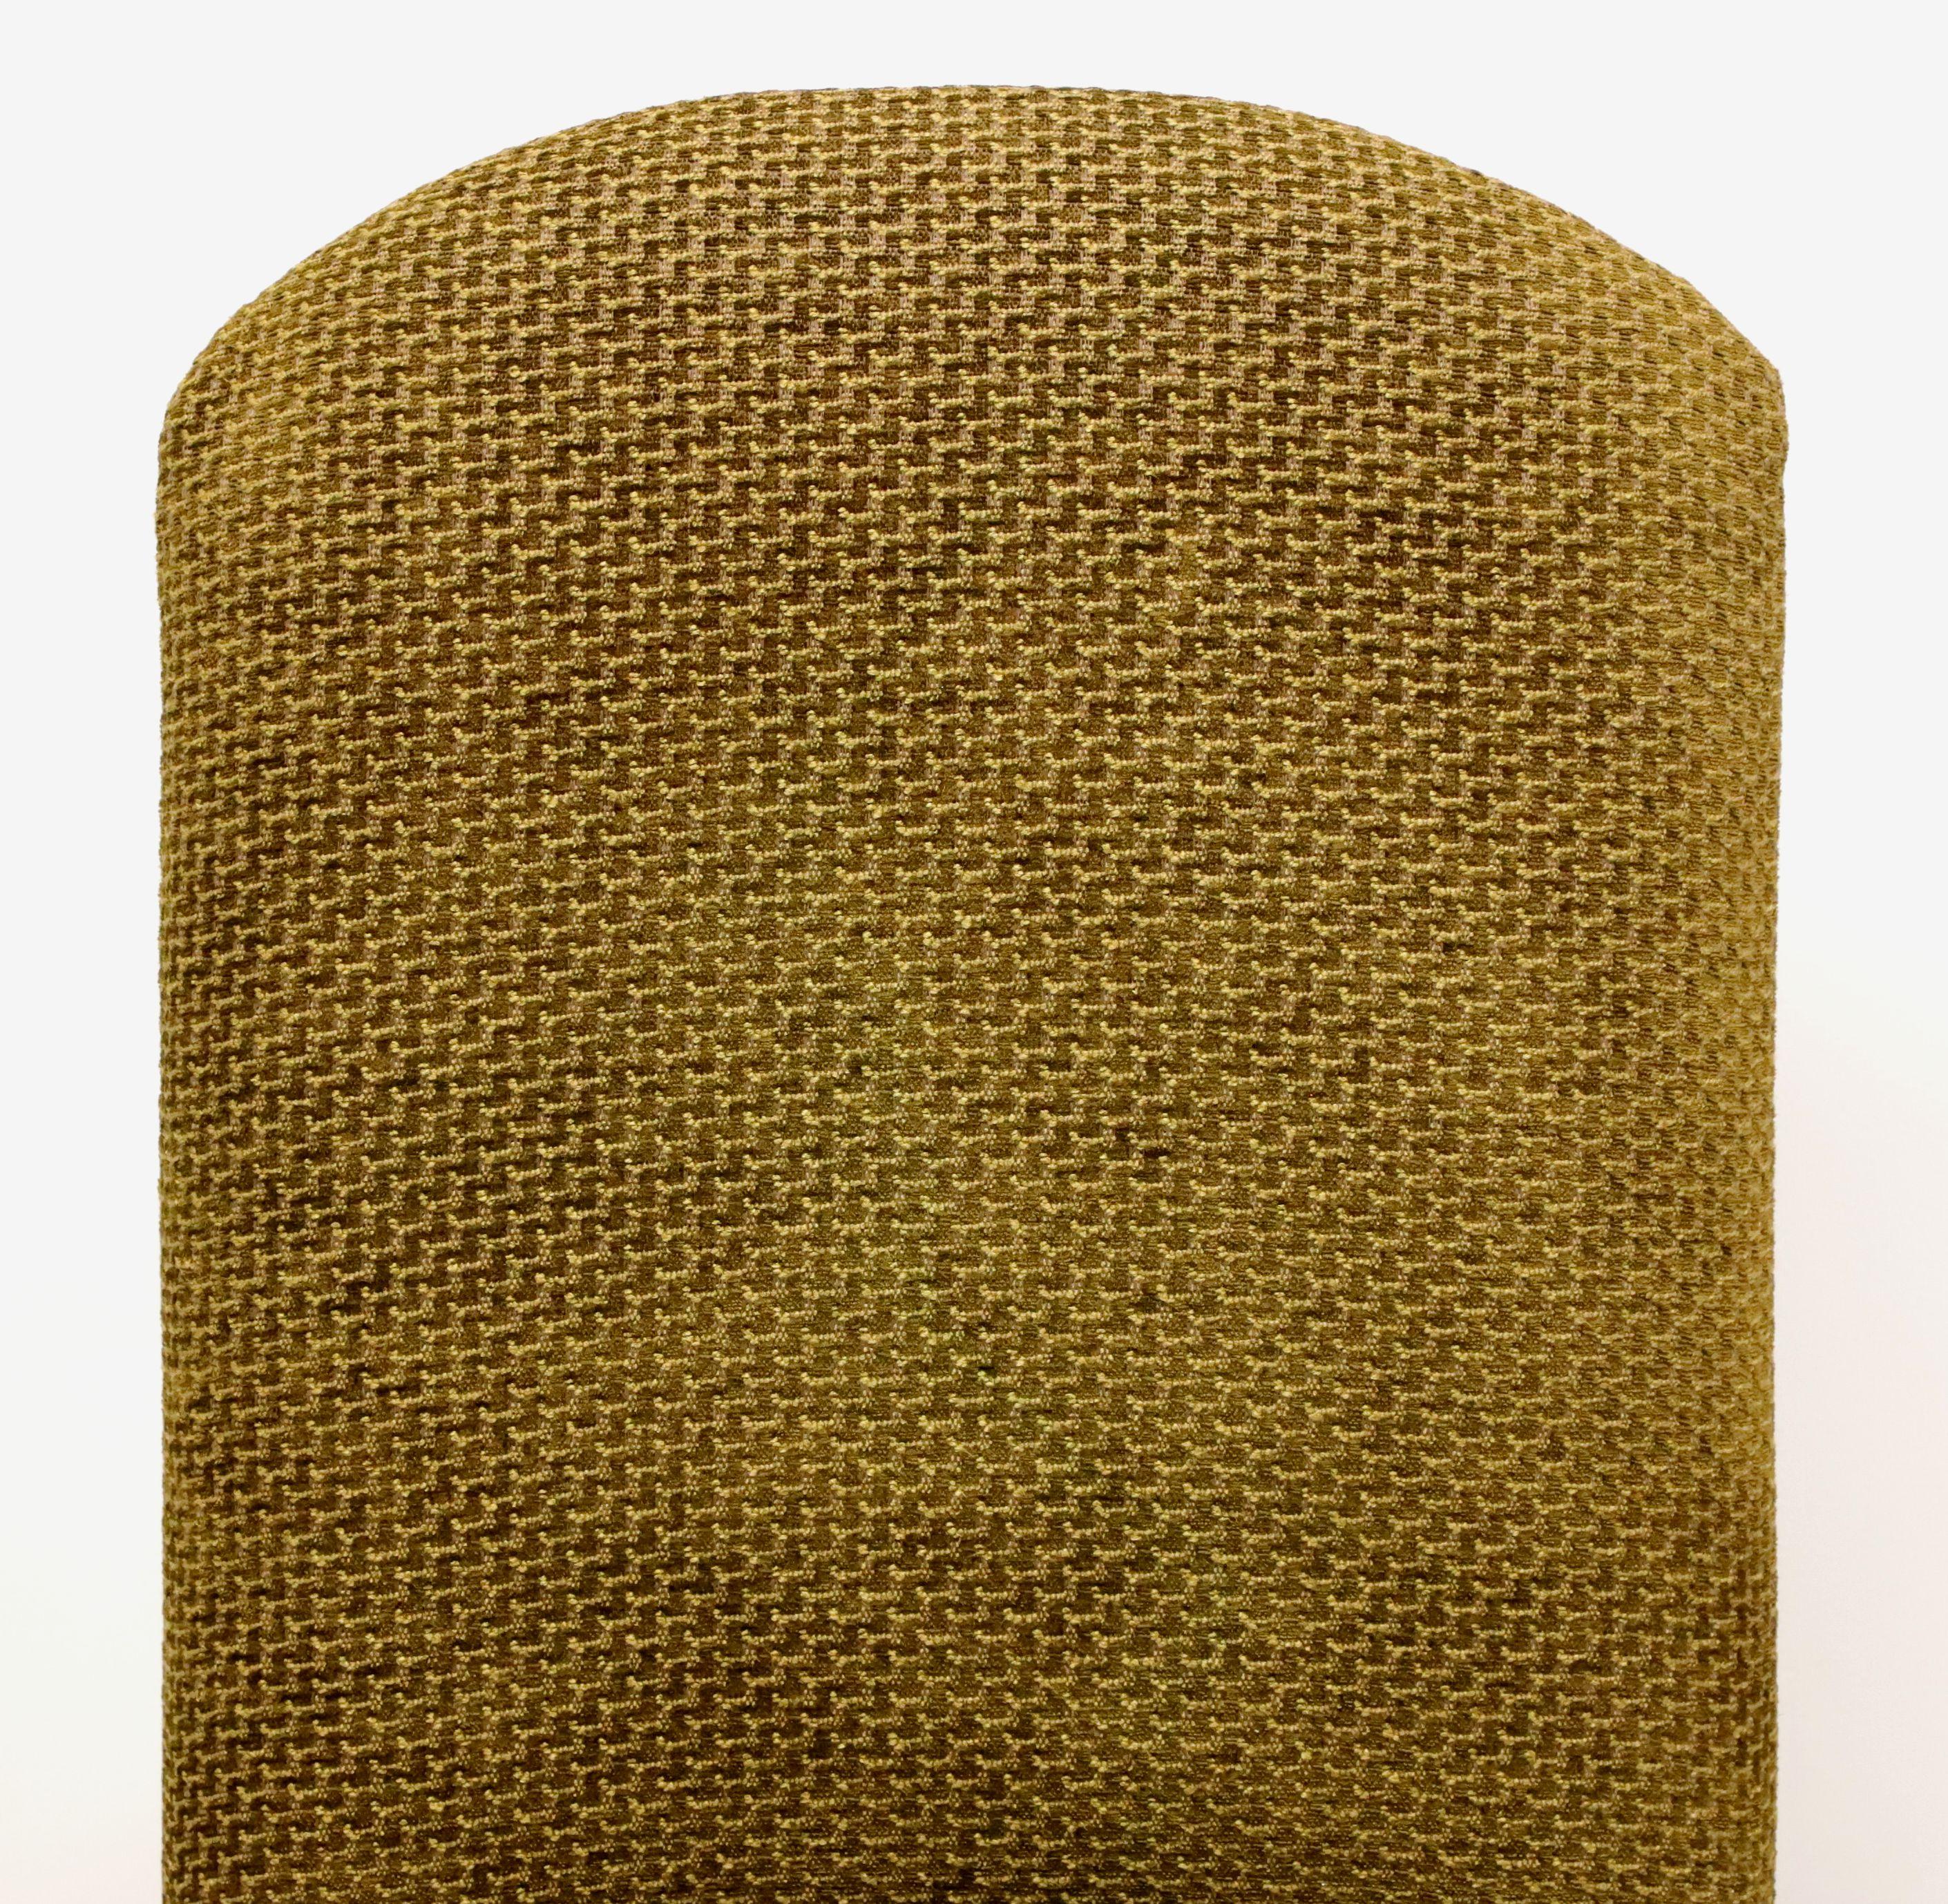 Olivgrüne gepolsterte Parsons-Stühle im Übergangsstil des 21. Jahrhunderts – Paar (Stoff) im Angebot